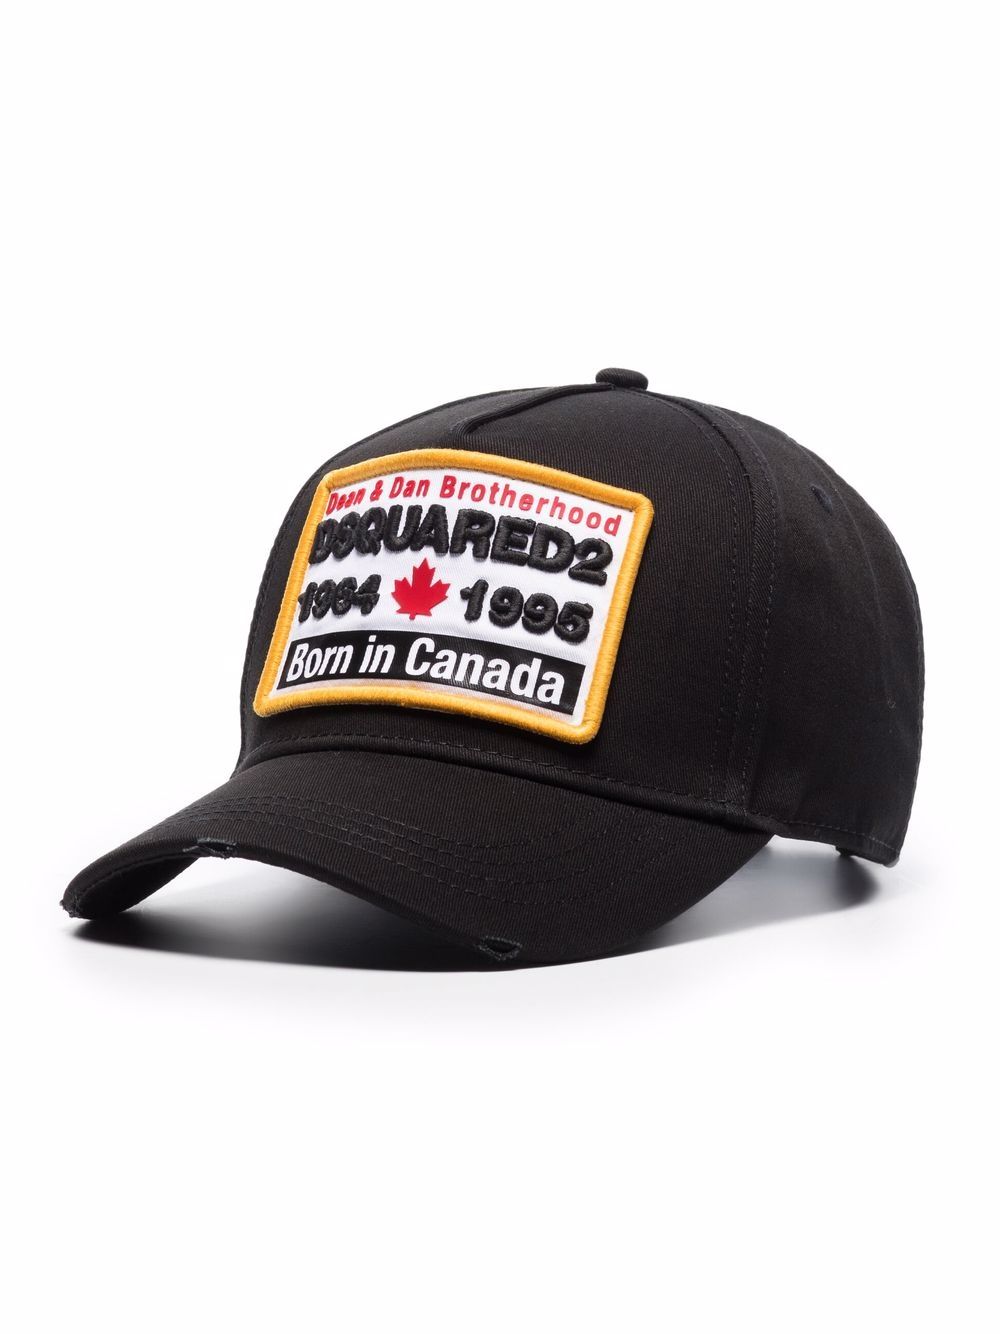 Dsquared2 'Born in Canada' baseball cap